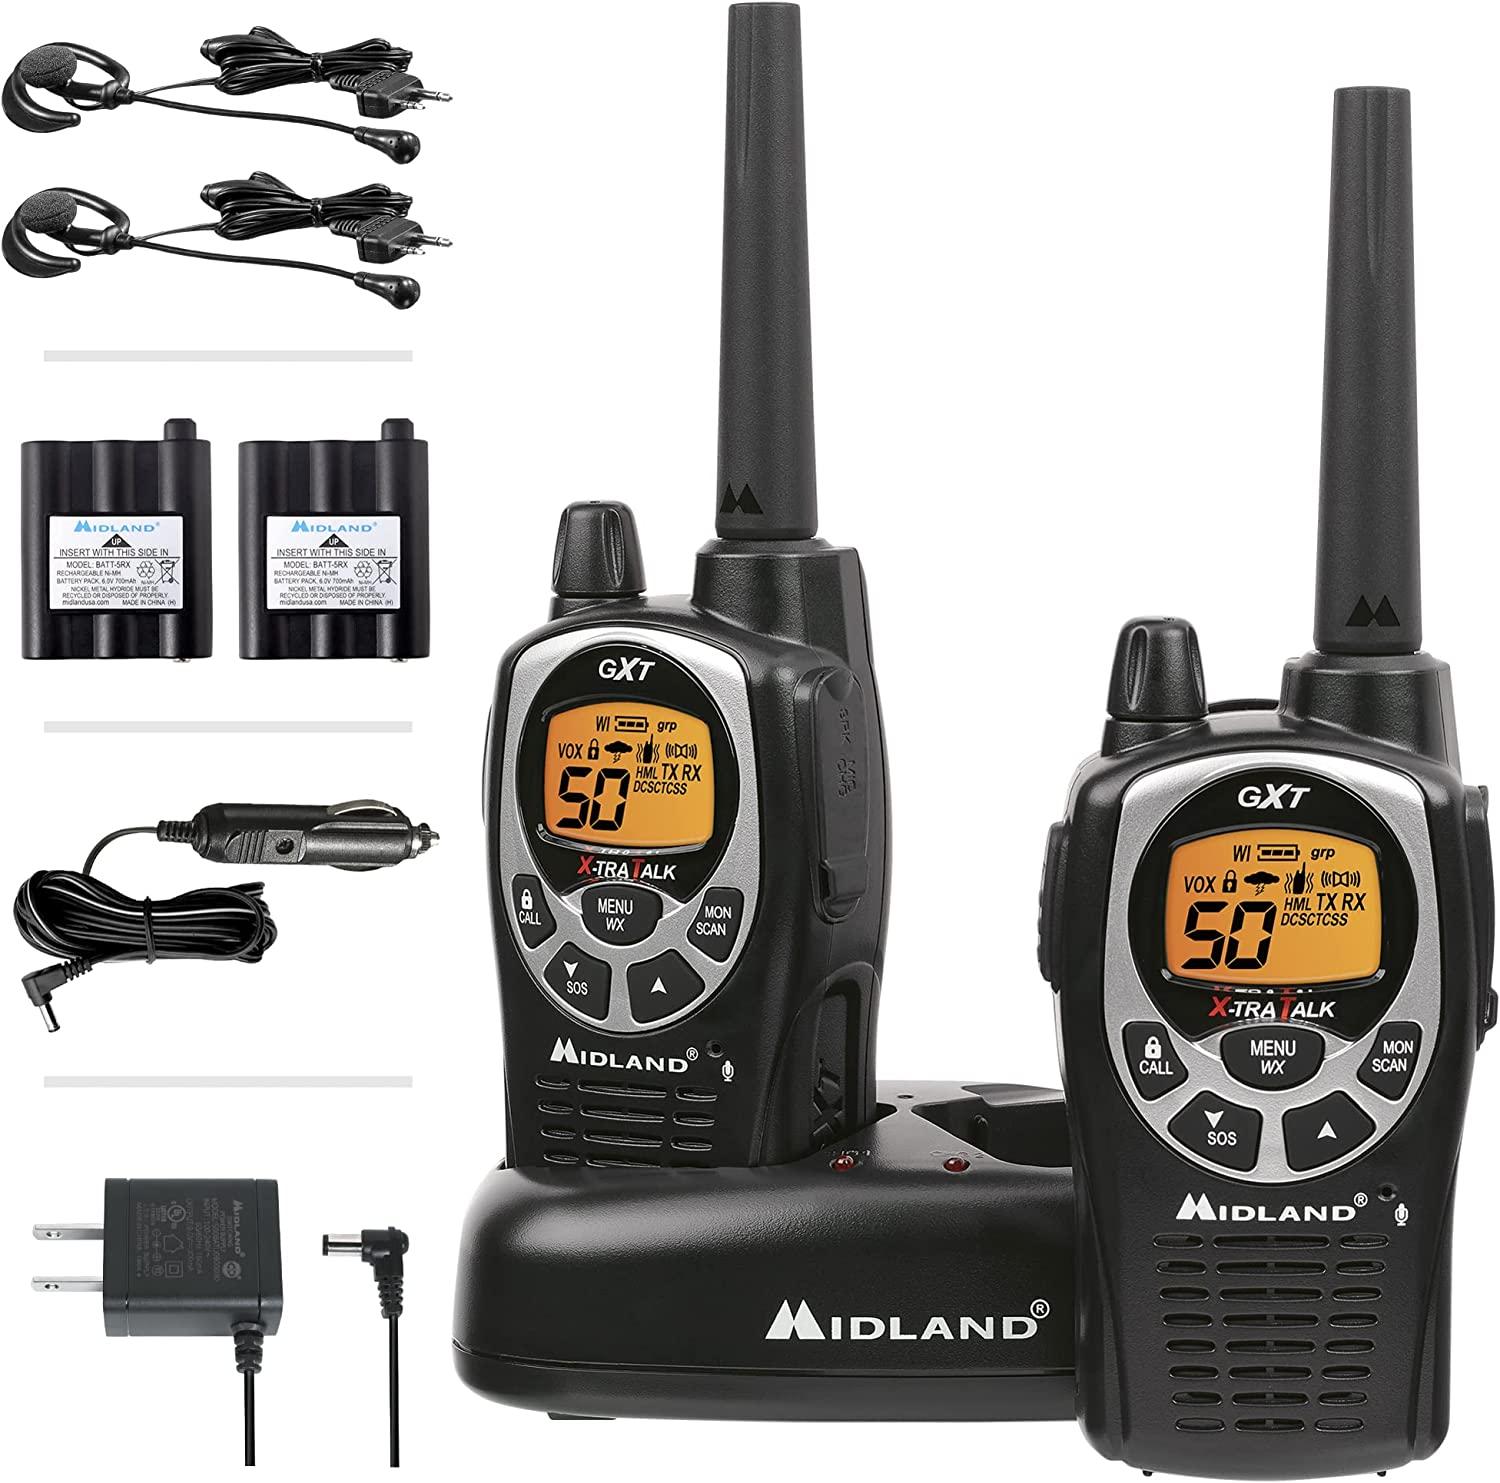 long range walkie-talkies- Midland GXT
